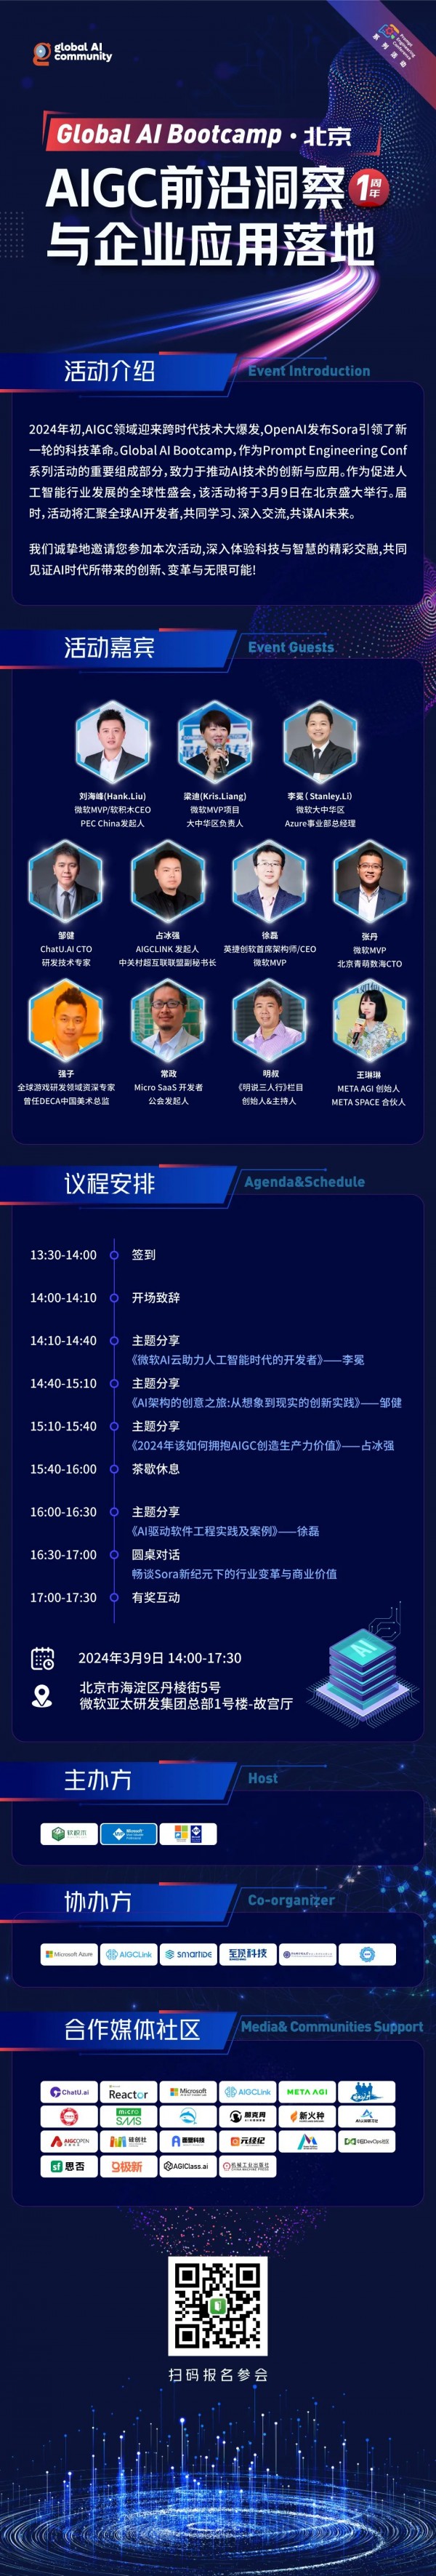 Global AI Bootcampo北京——AIGC前沿洞察与企业应用落地